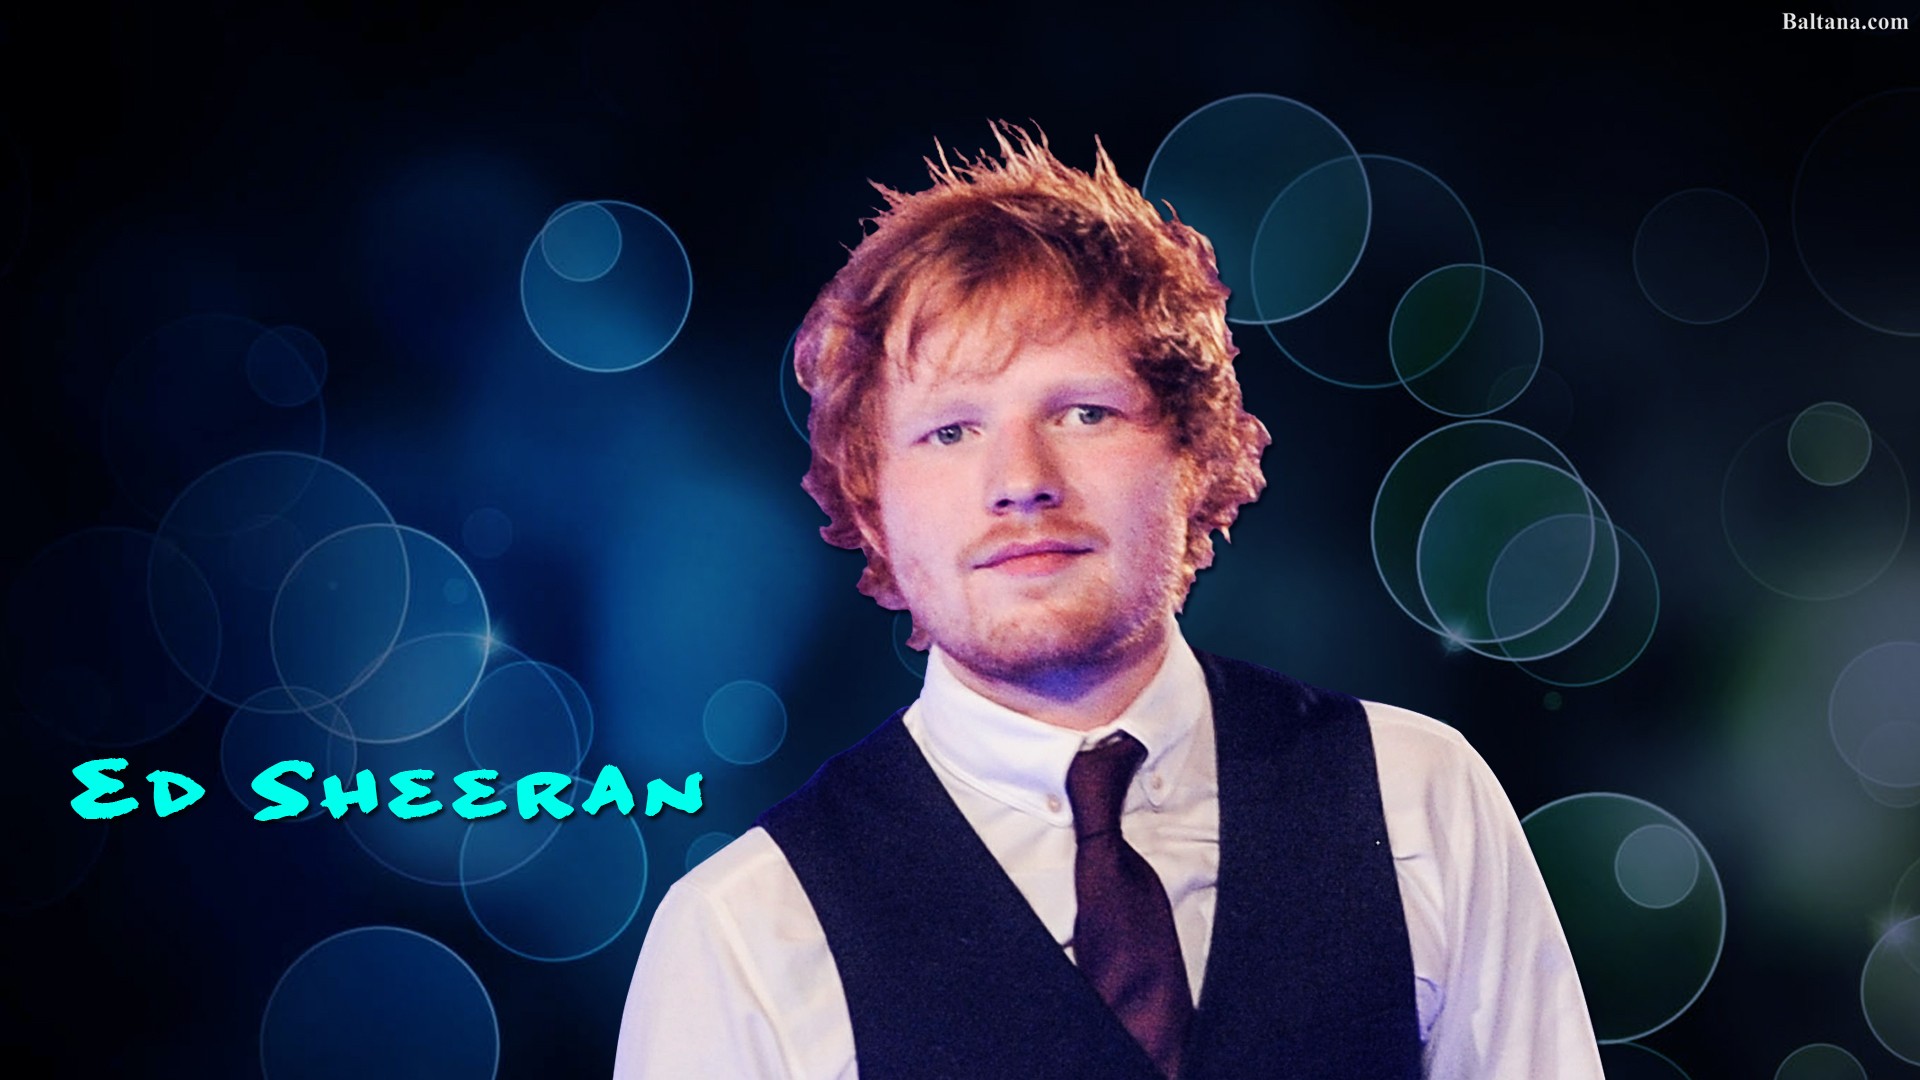 Ed Sheeran Hd Desktop Wallpaper - Ed Sheeran - HD Wallpaper 